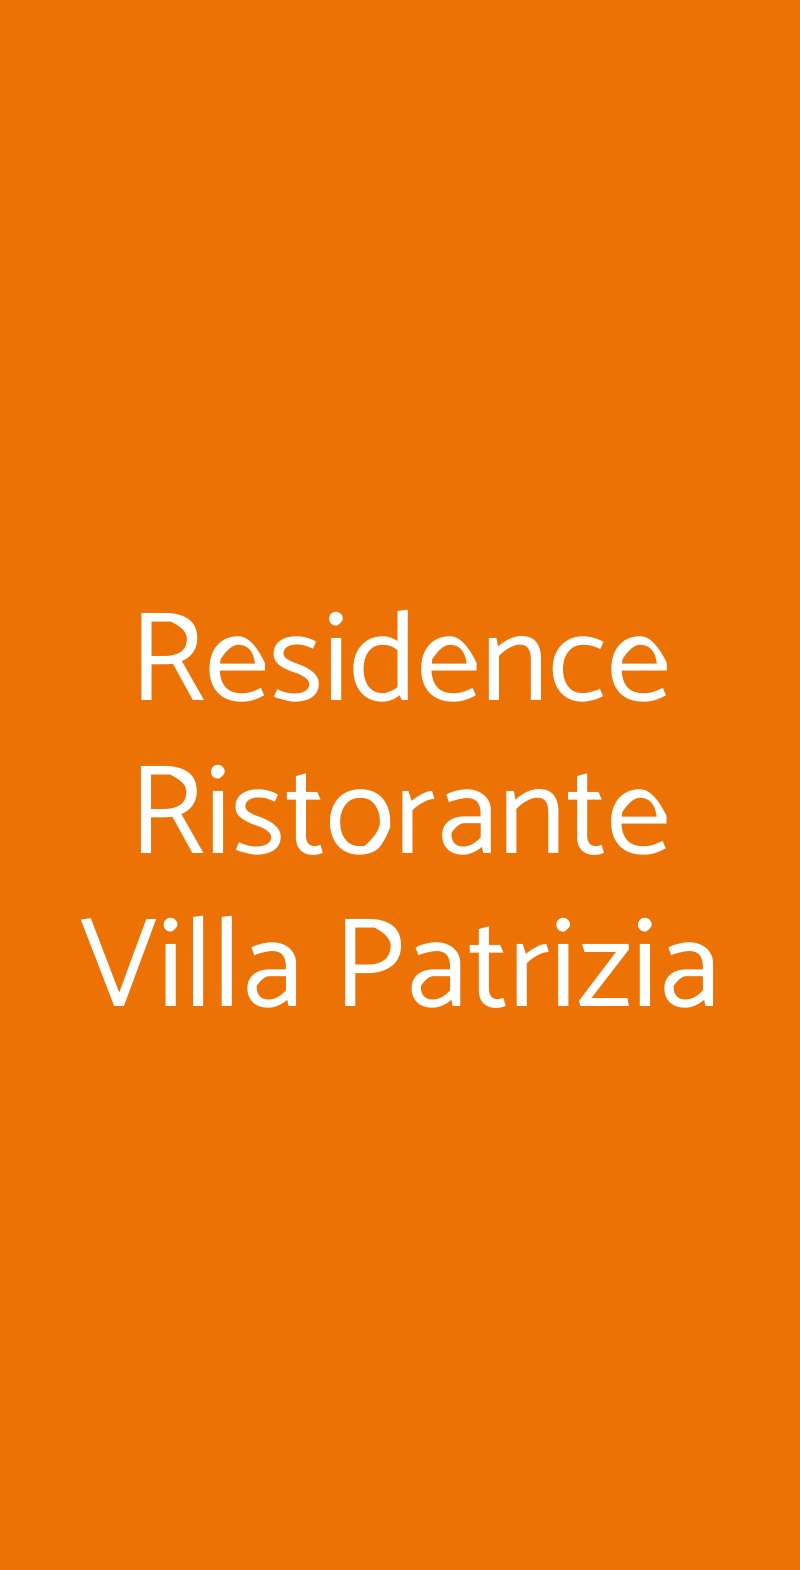 Residence Ristorante Villa Patrizia Roma menù 1 pagina